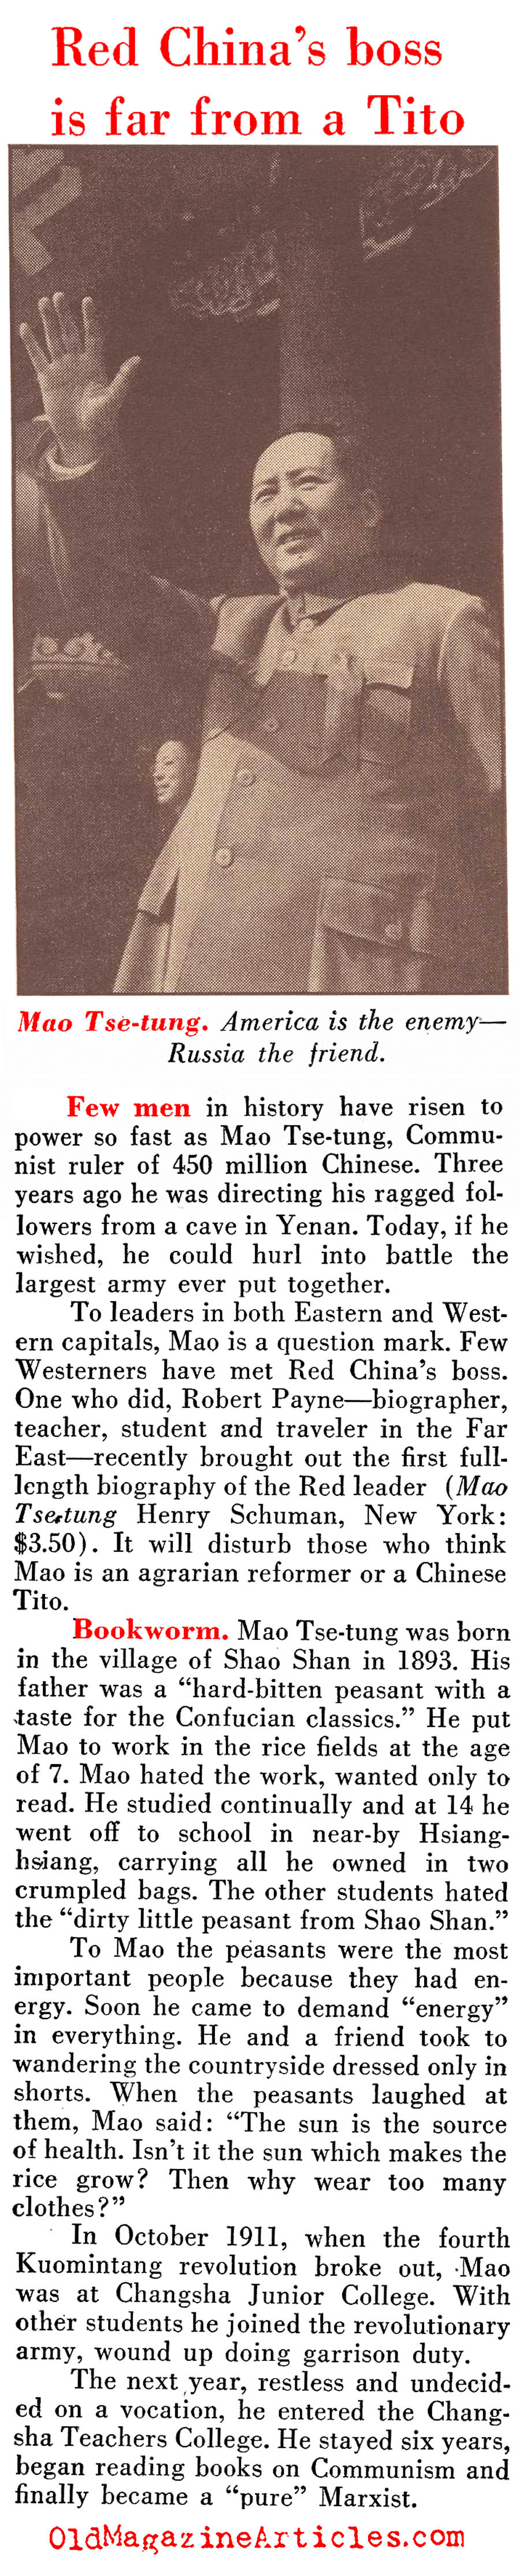 Meet Mao Zedong (Pathfinder Magazine, 1950)